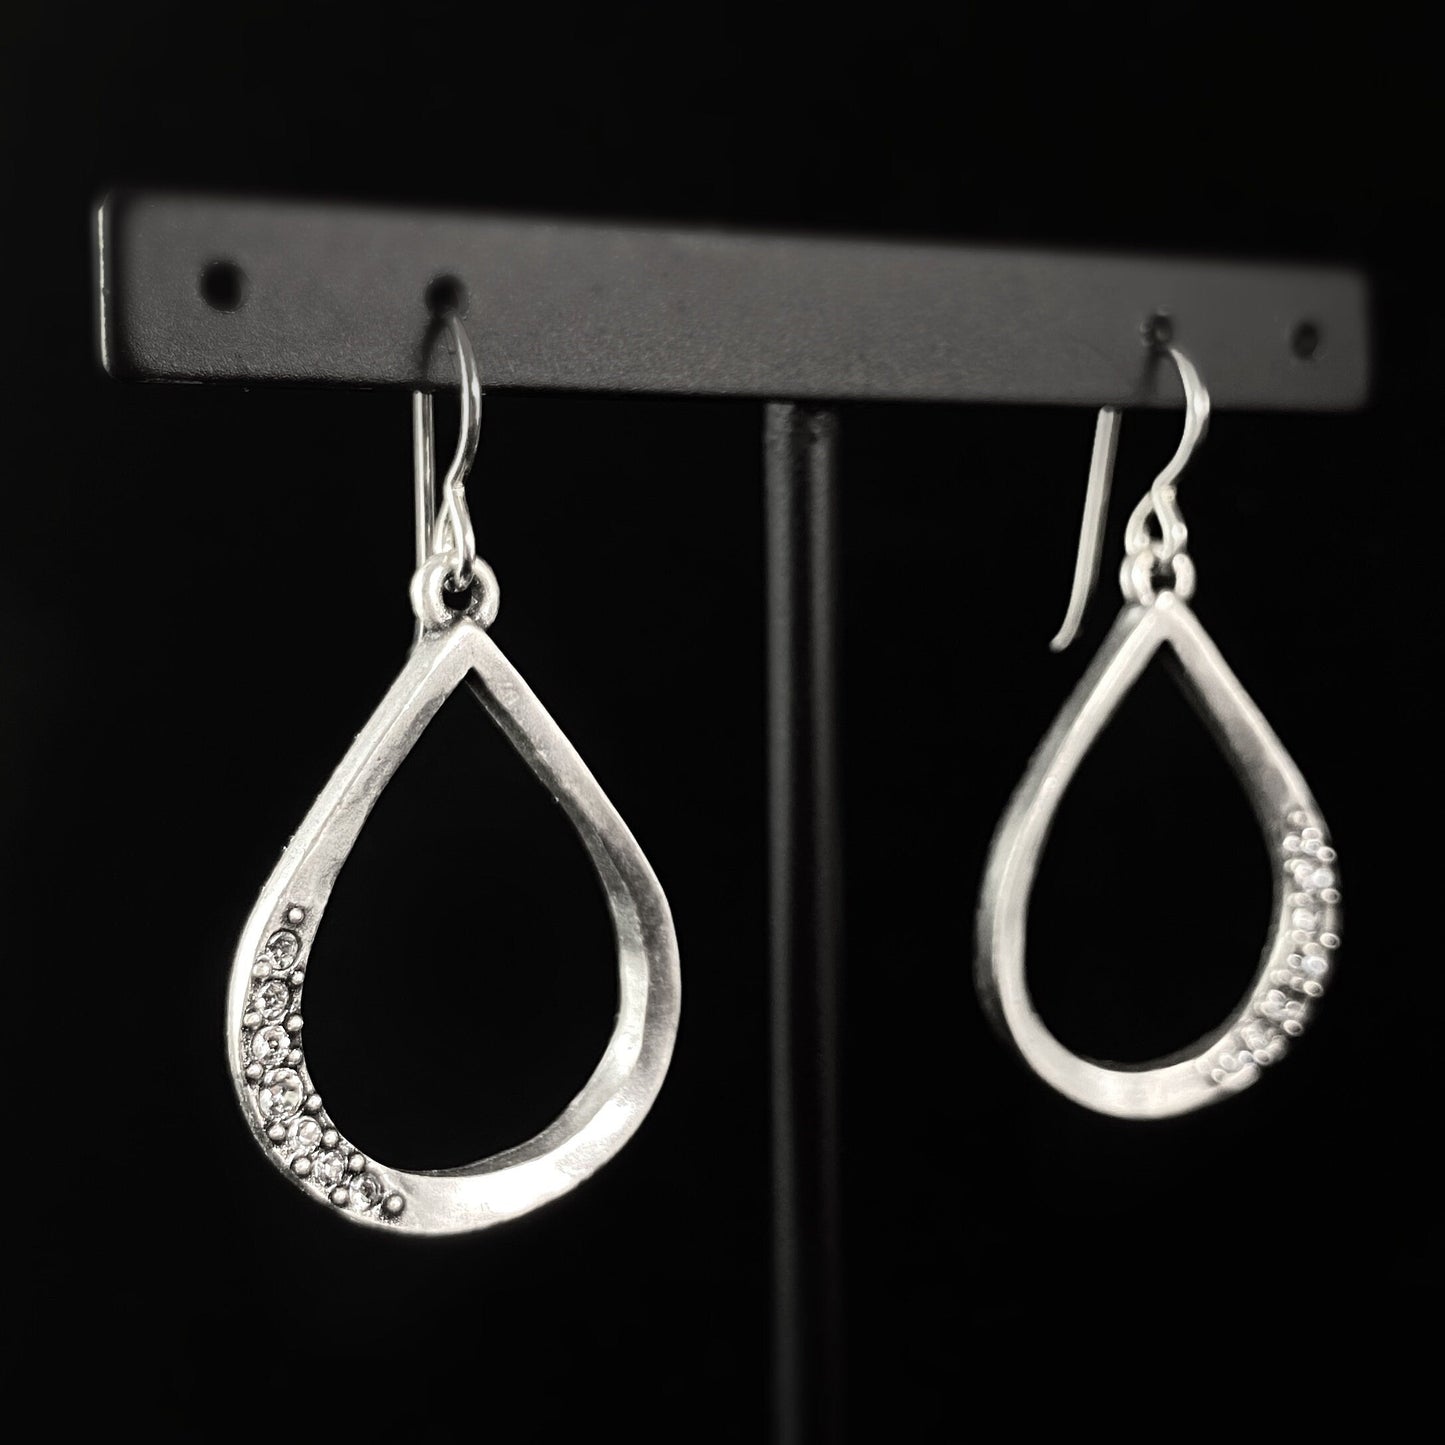 Handmade Silver Teardrop Earrings with Crystals - Moon Dance